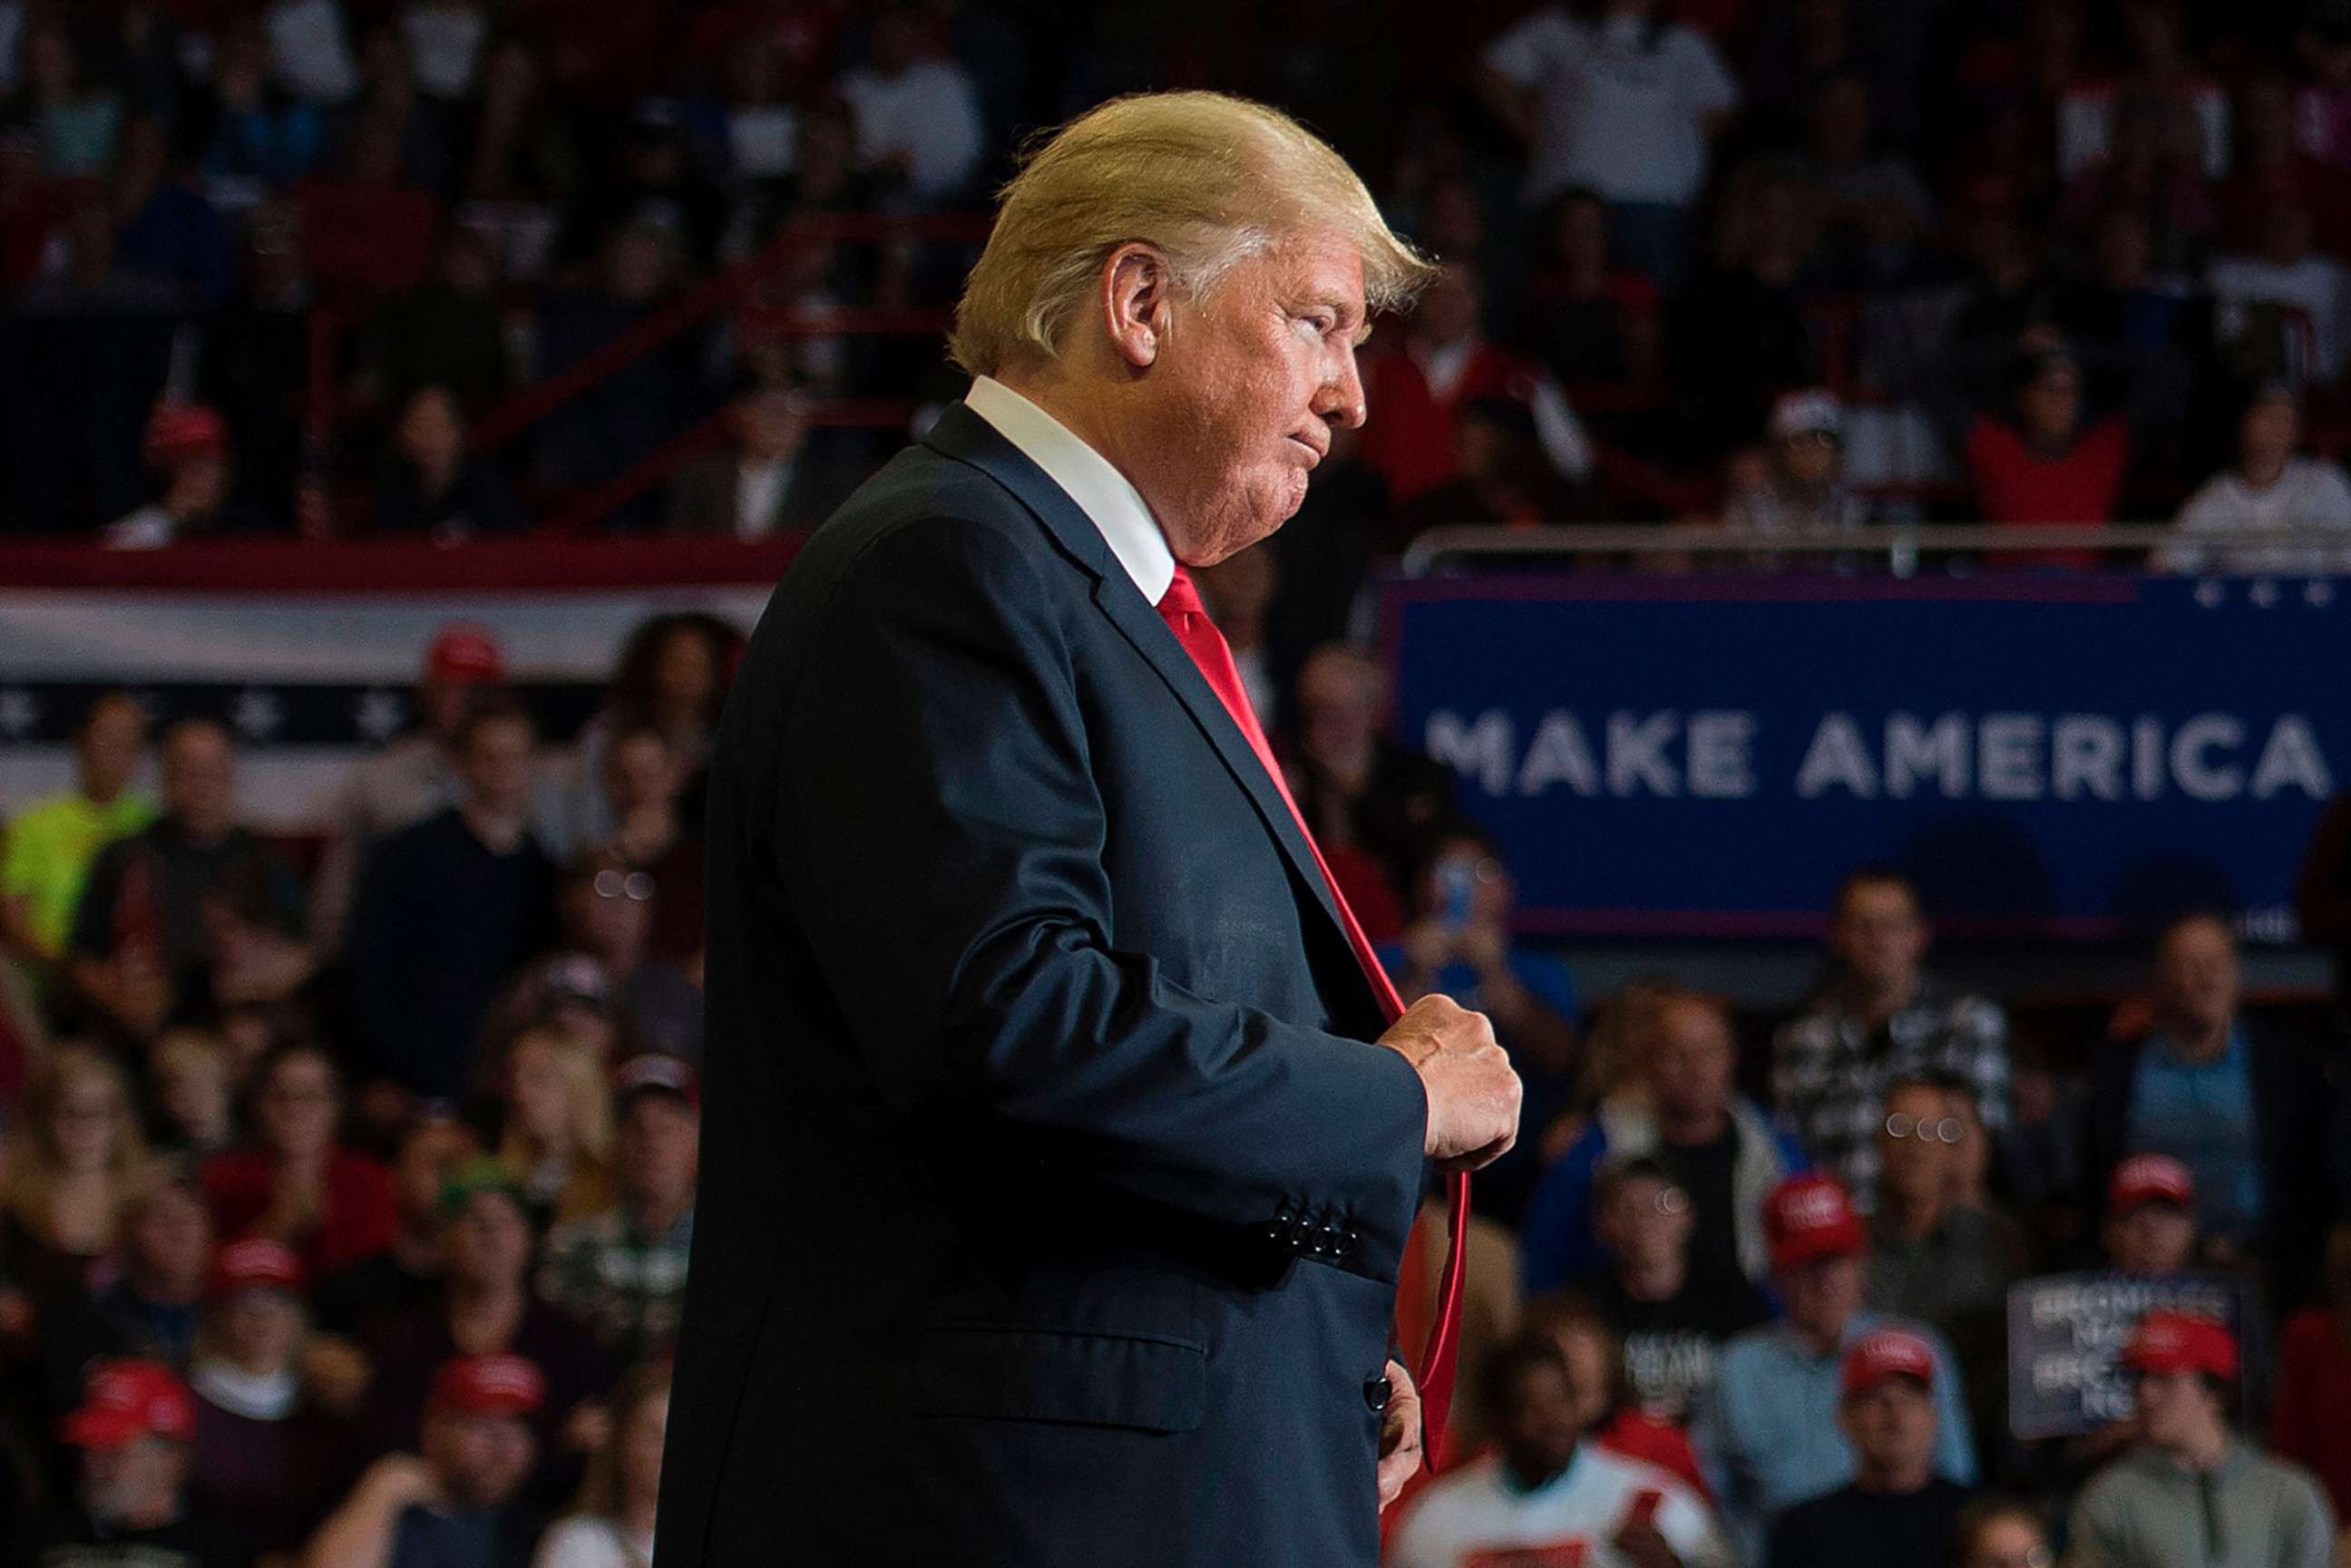 PHOTO: President Donald Trump attends a Make America Great Again rally in Cape Girardeau, Mo., Nov. 5, 2018.